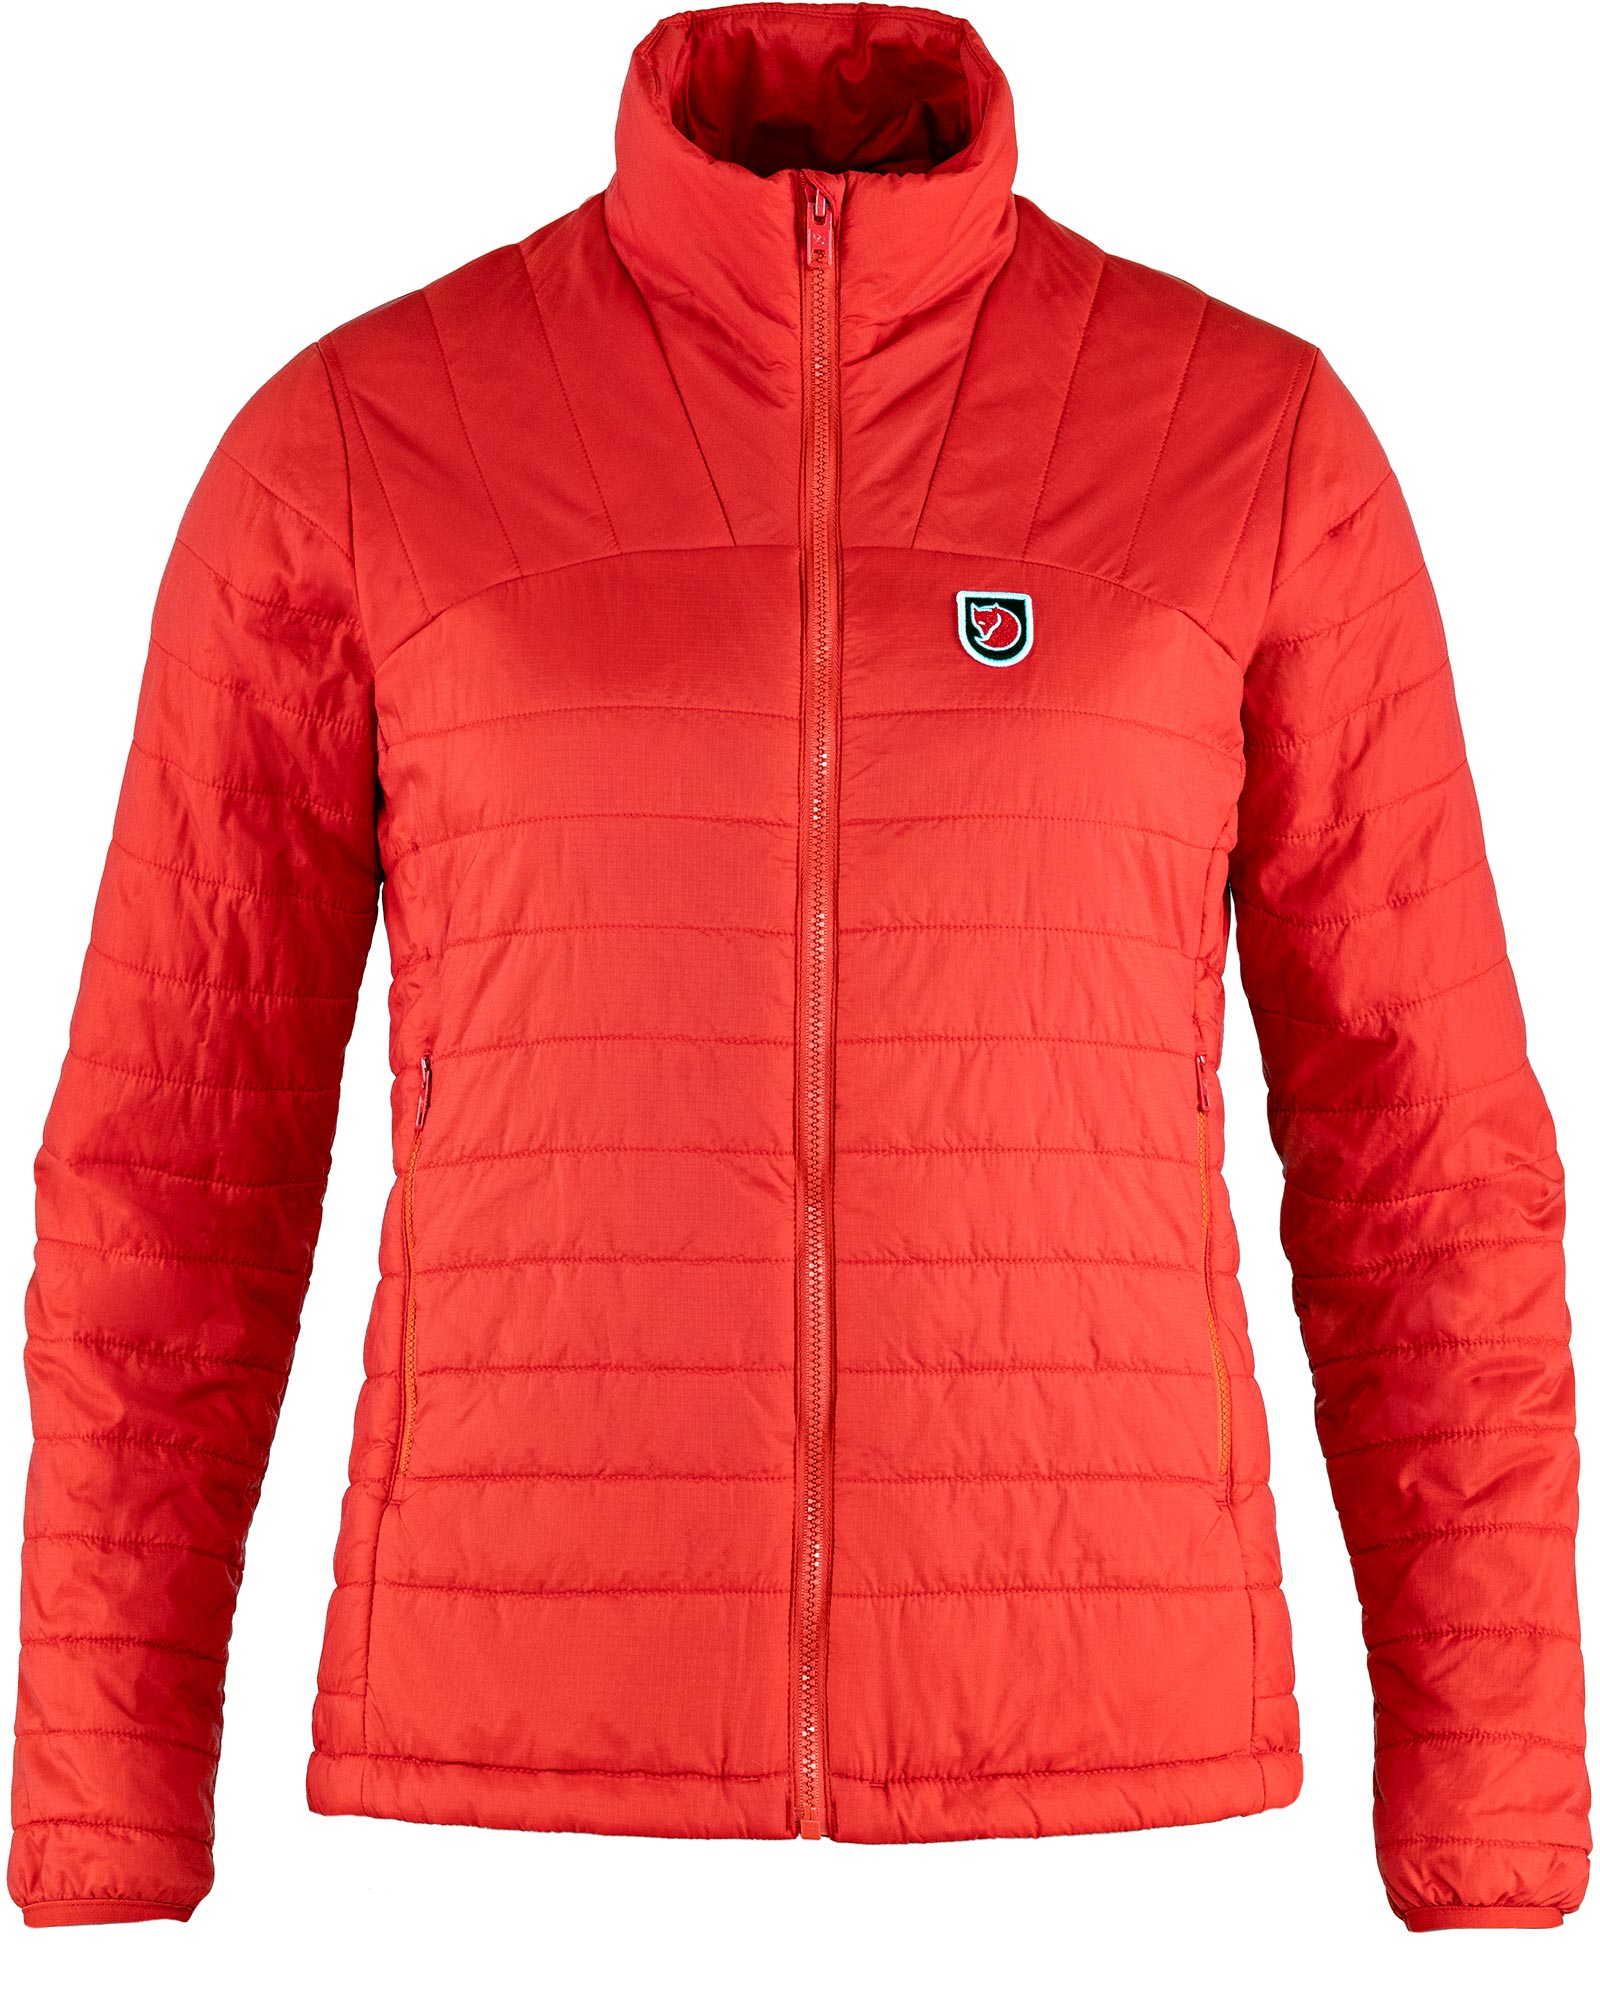 Fjallraven Expedition Latt Women’s Insulated Jacket - True Red L